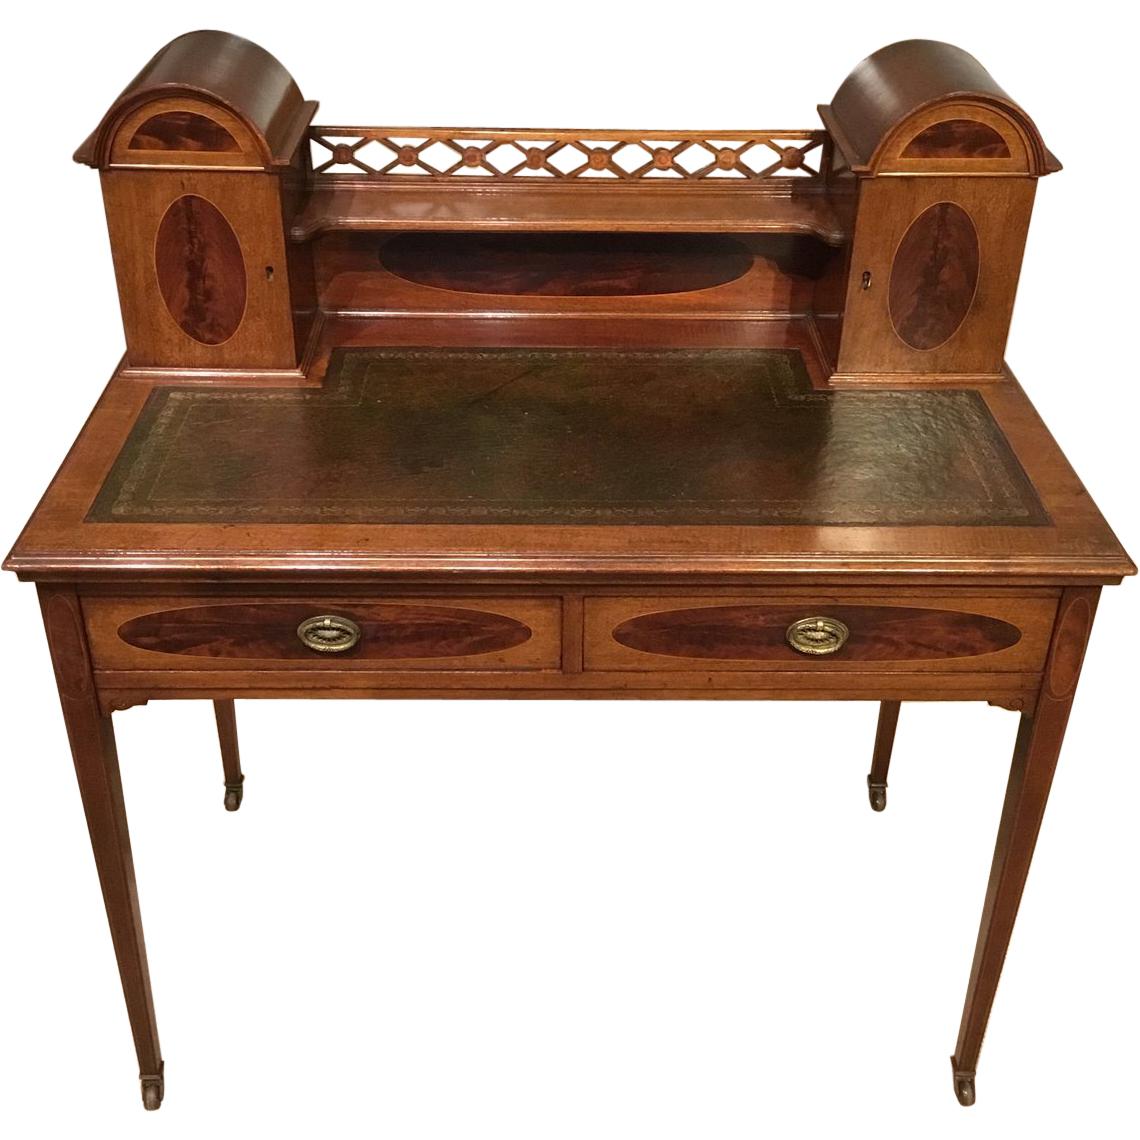 Mahogany Inlaid Edwardian Period Ladies Writing Table